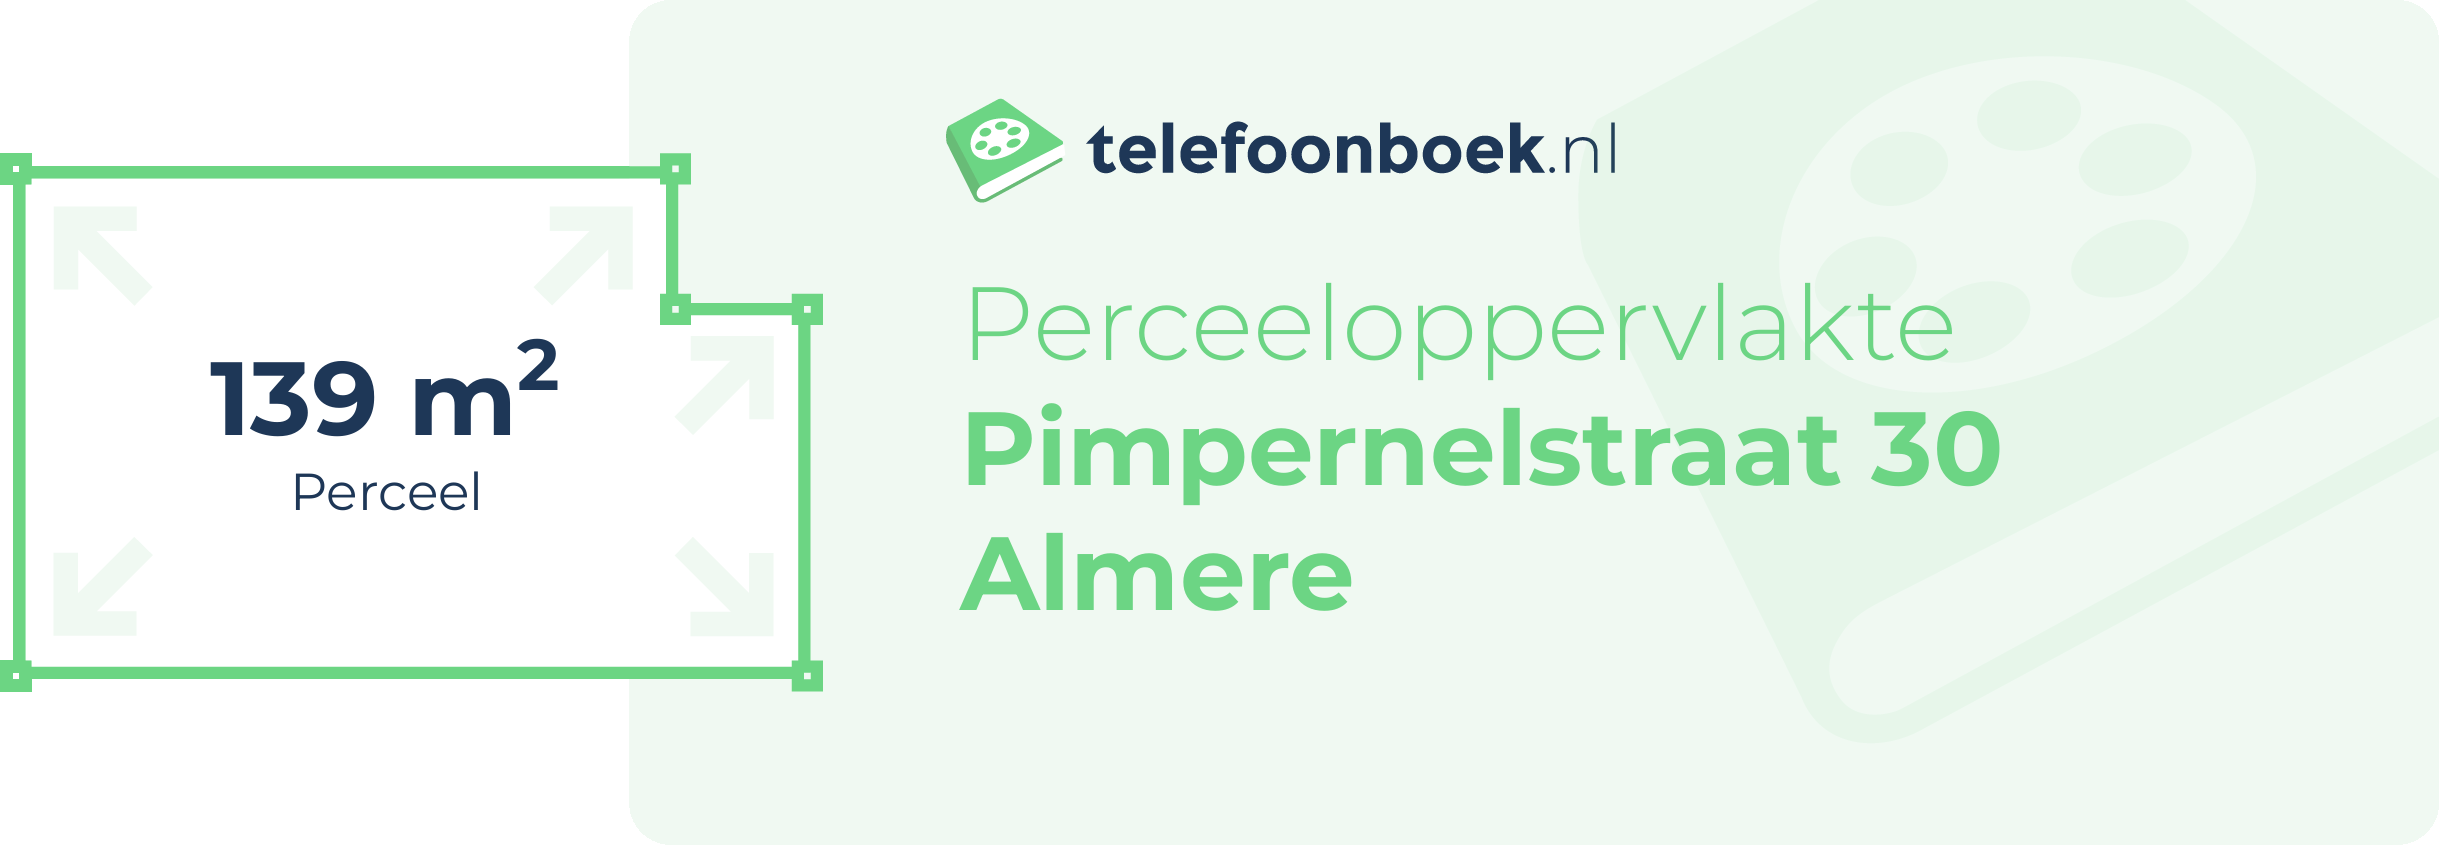 Perceeloppervlakte Pimpernelstraat 30 Almere